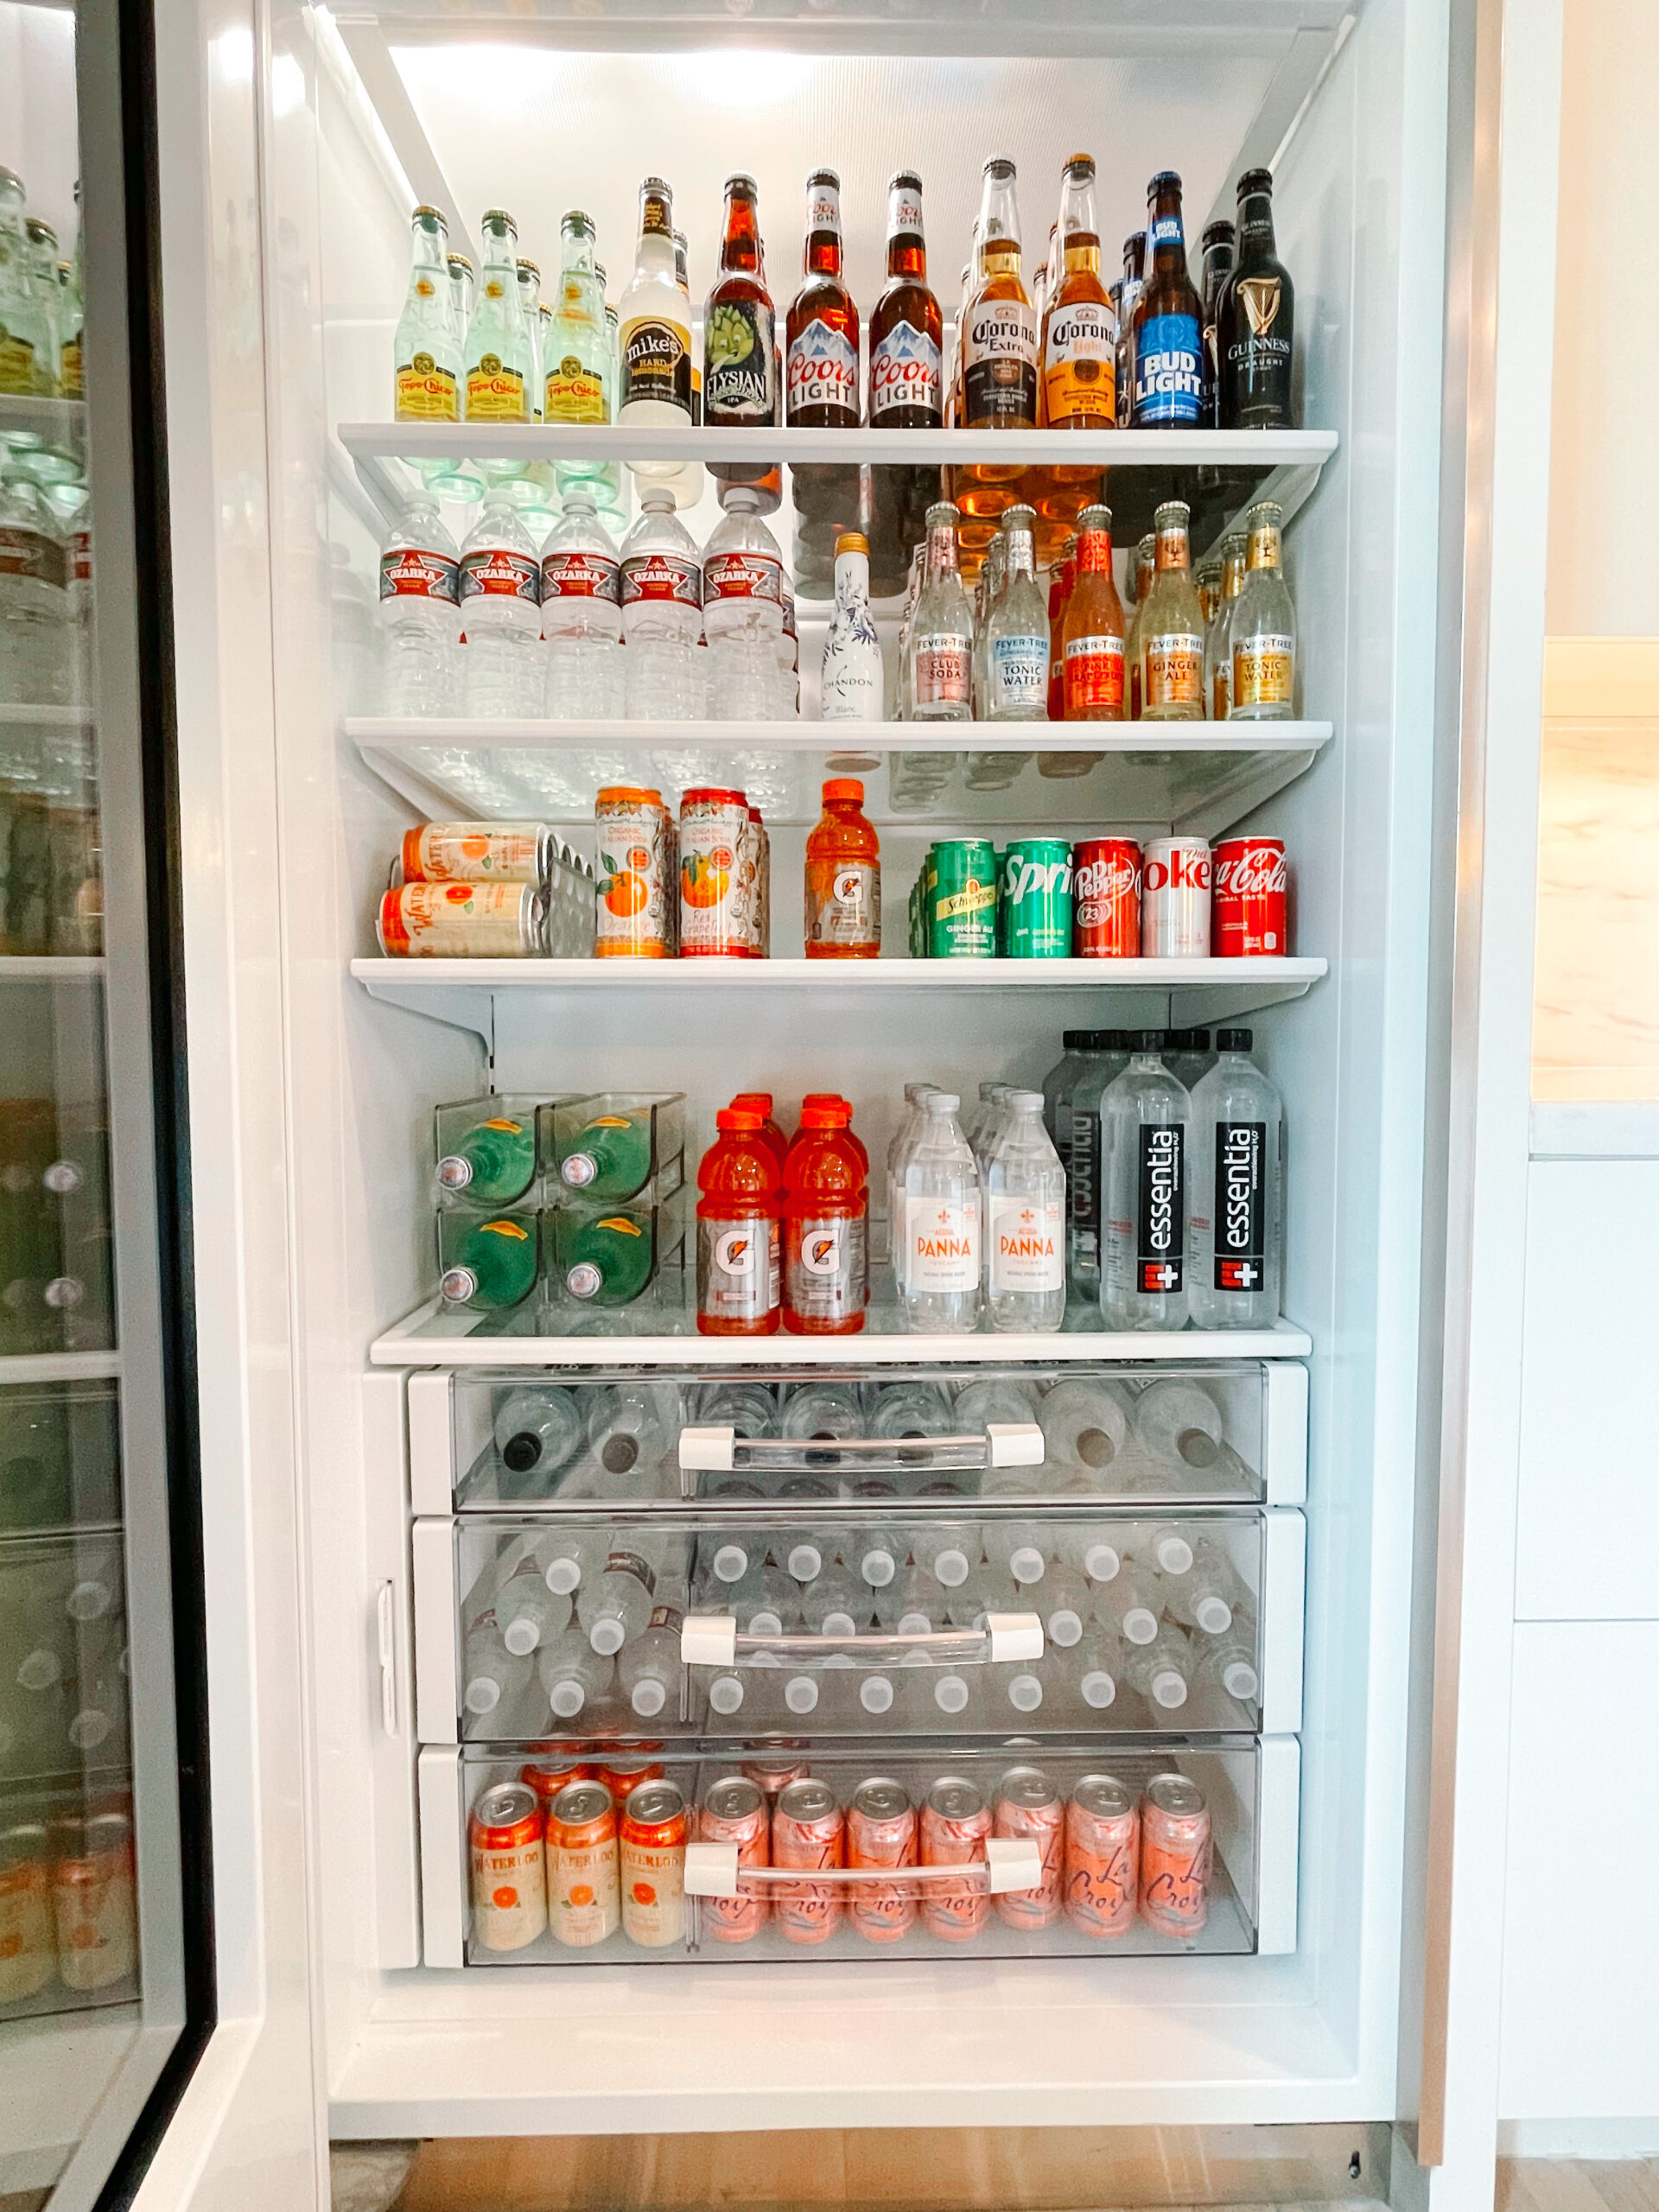 Organizing drinks in the refrigerator #springrefresh #homeorganization #springcleaning #refrigeratororganization 